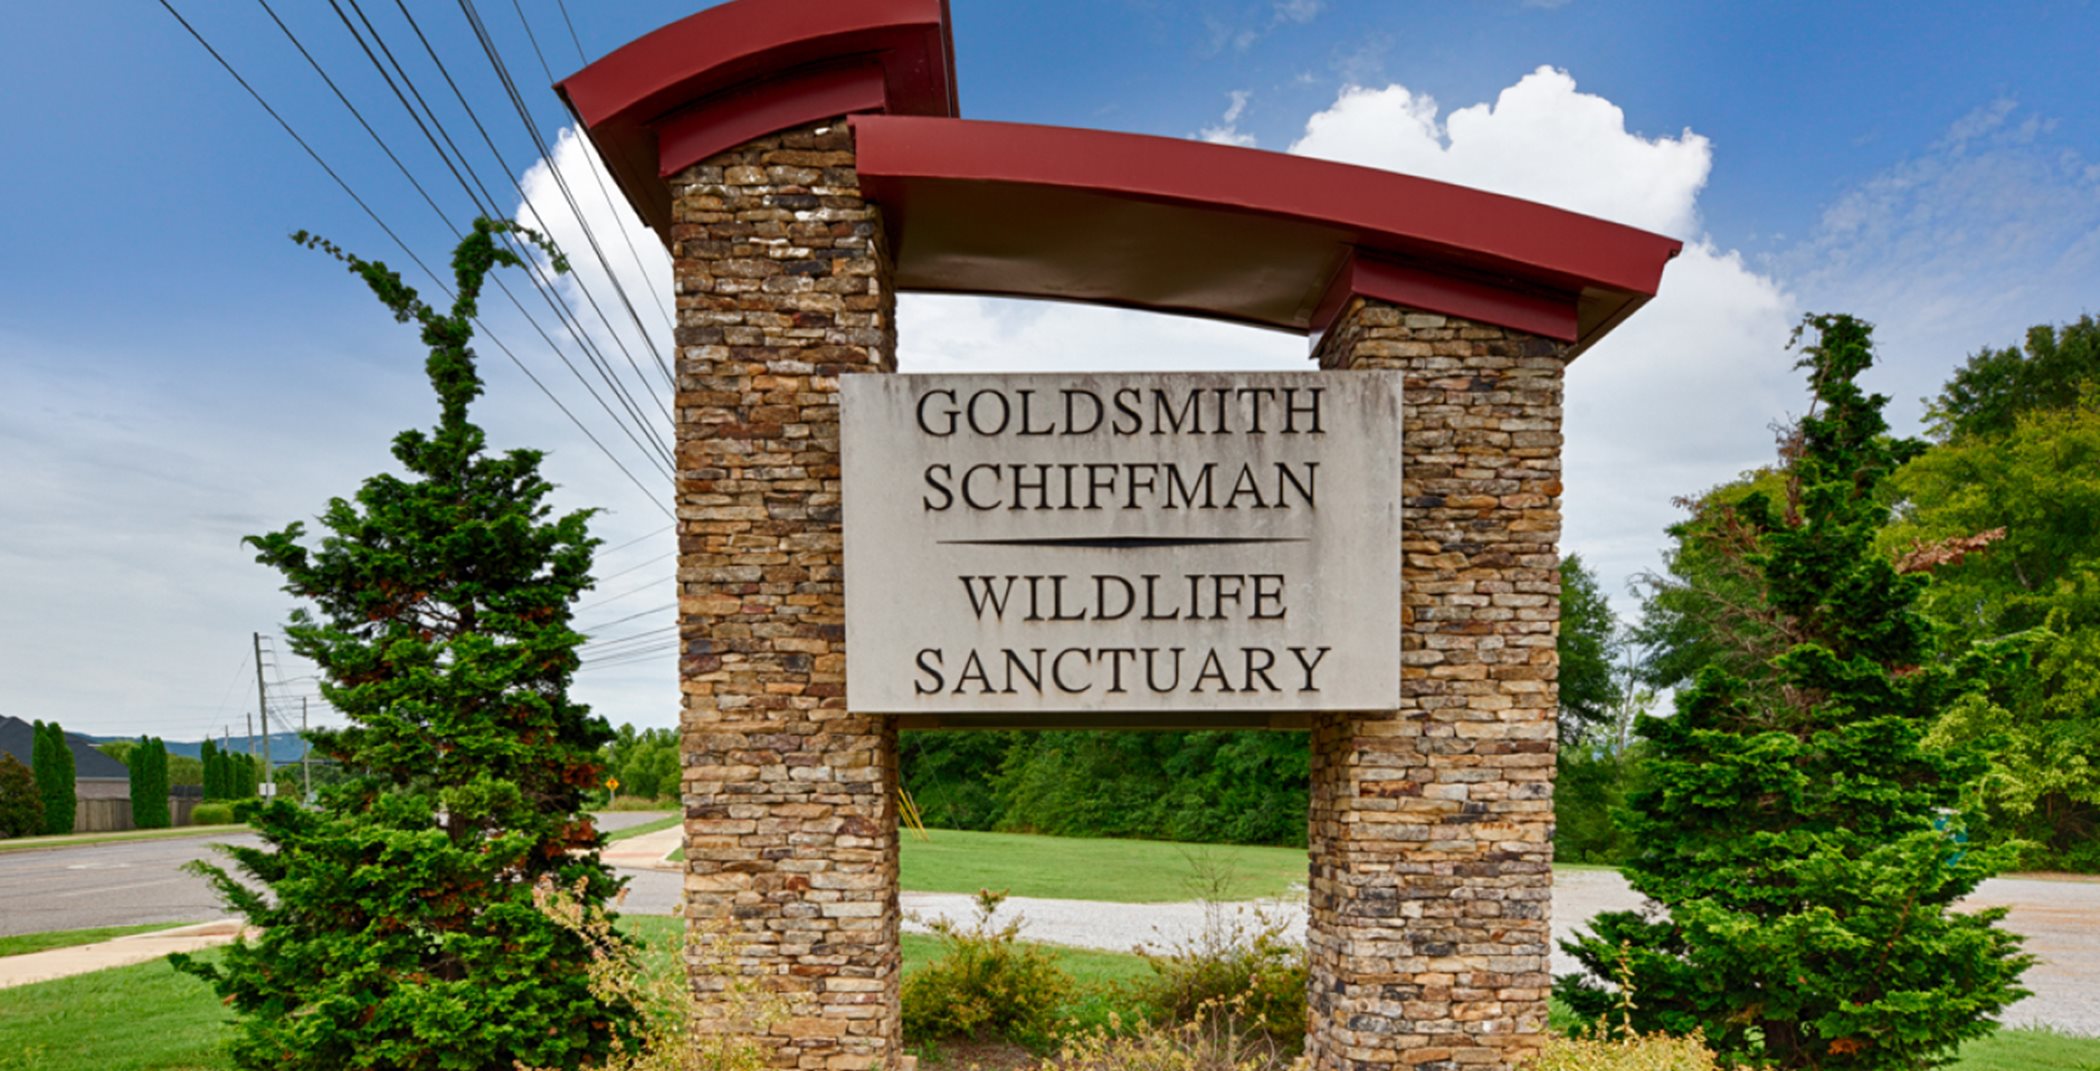 Goldsmith Schiffman Wildlife Sanctuary